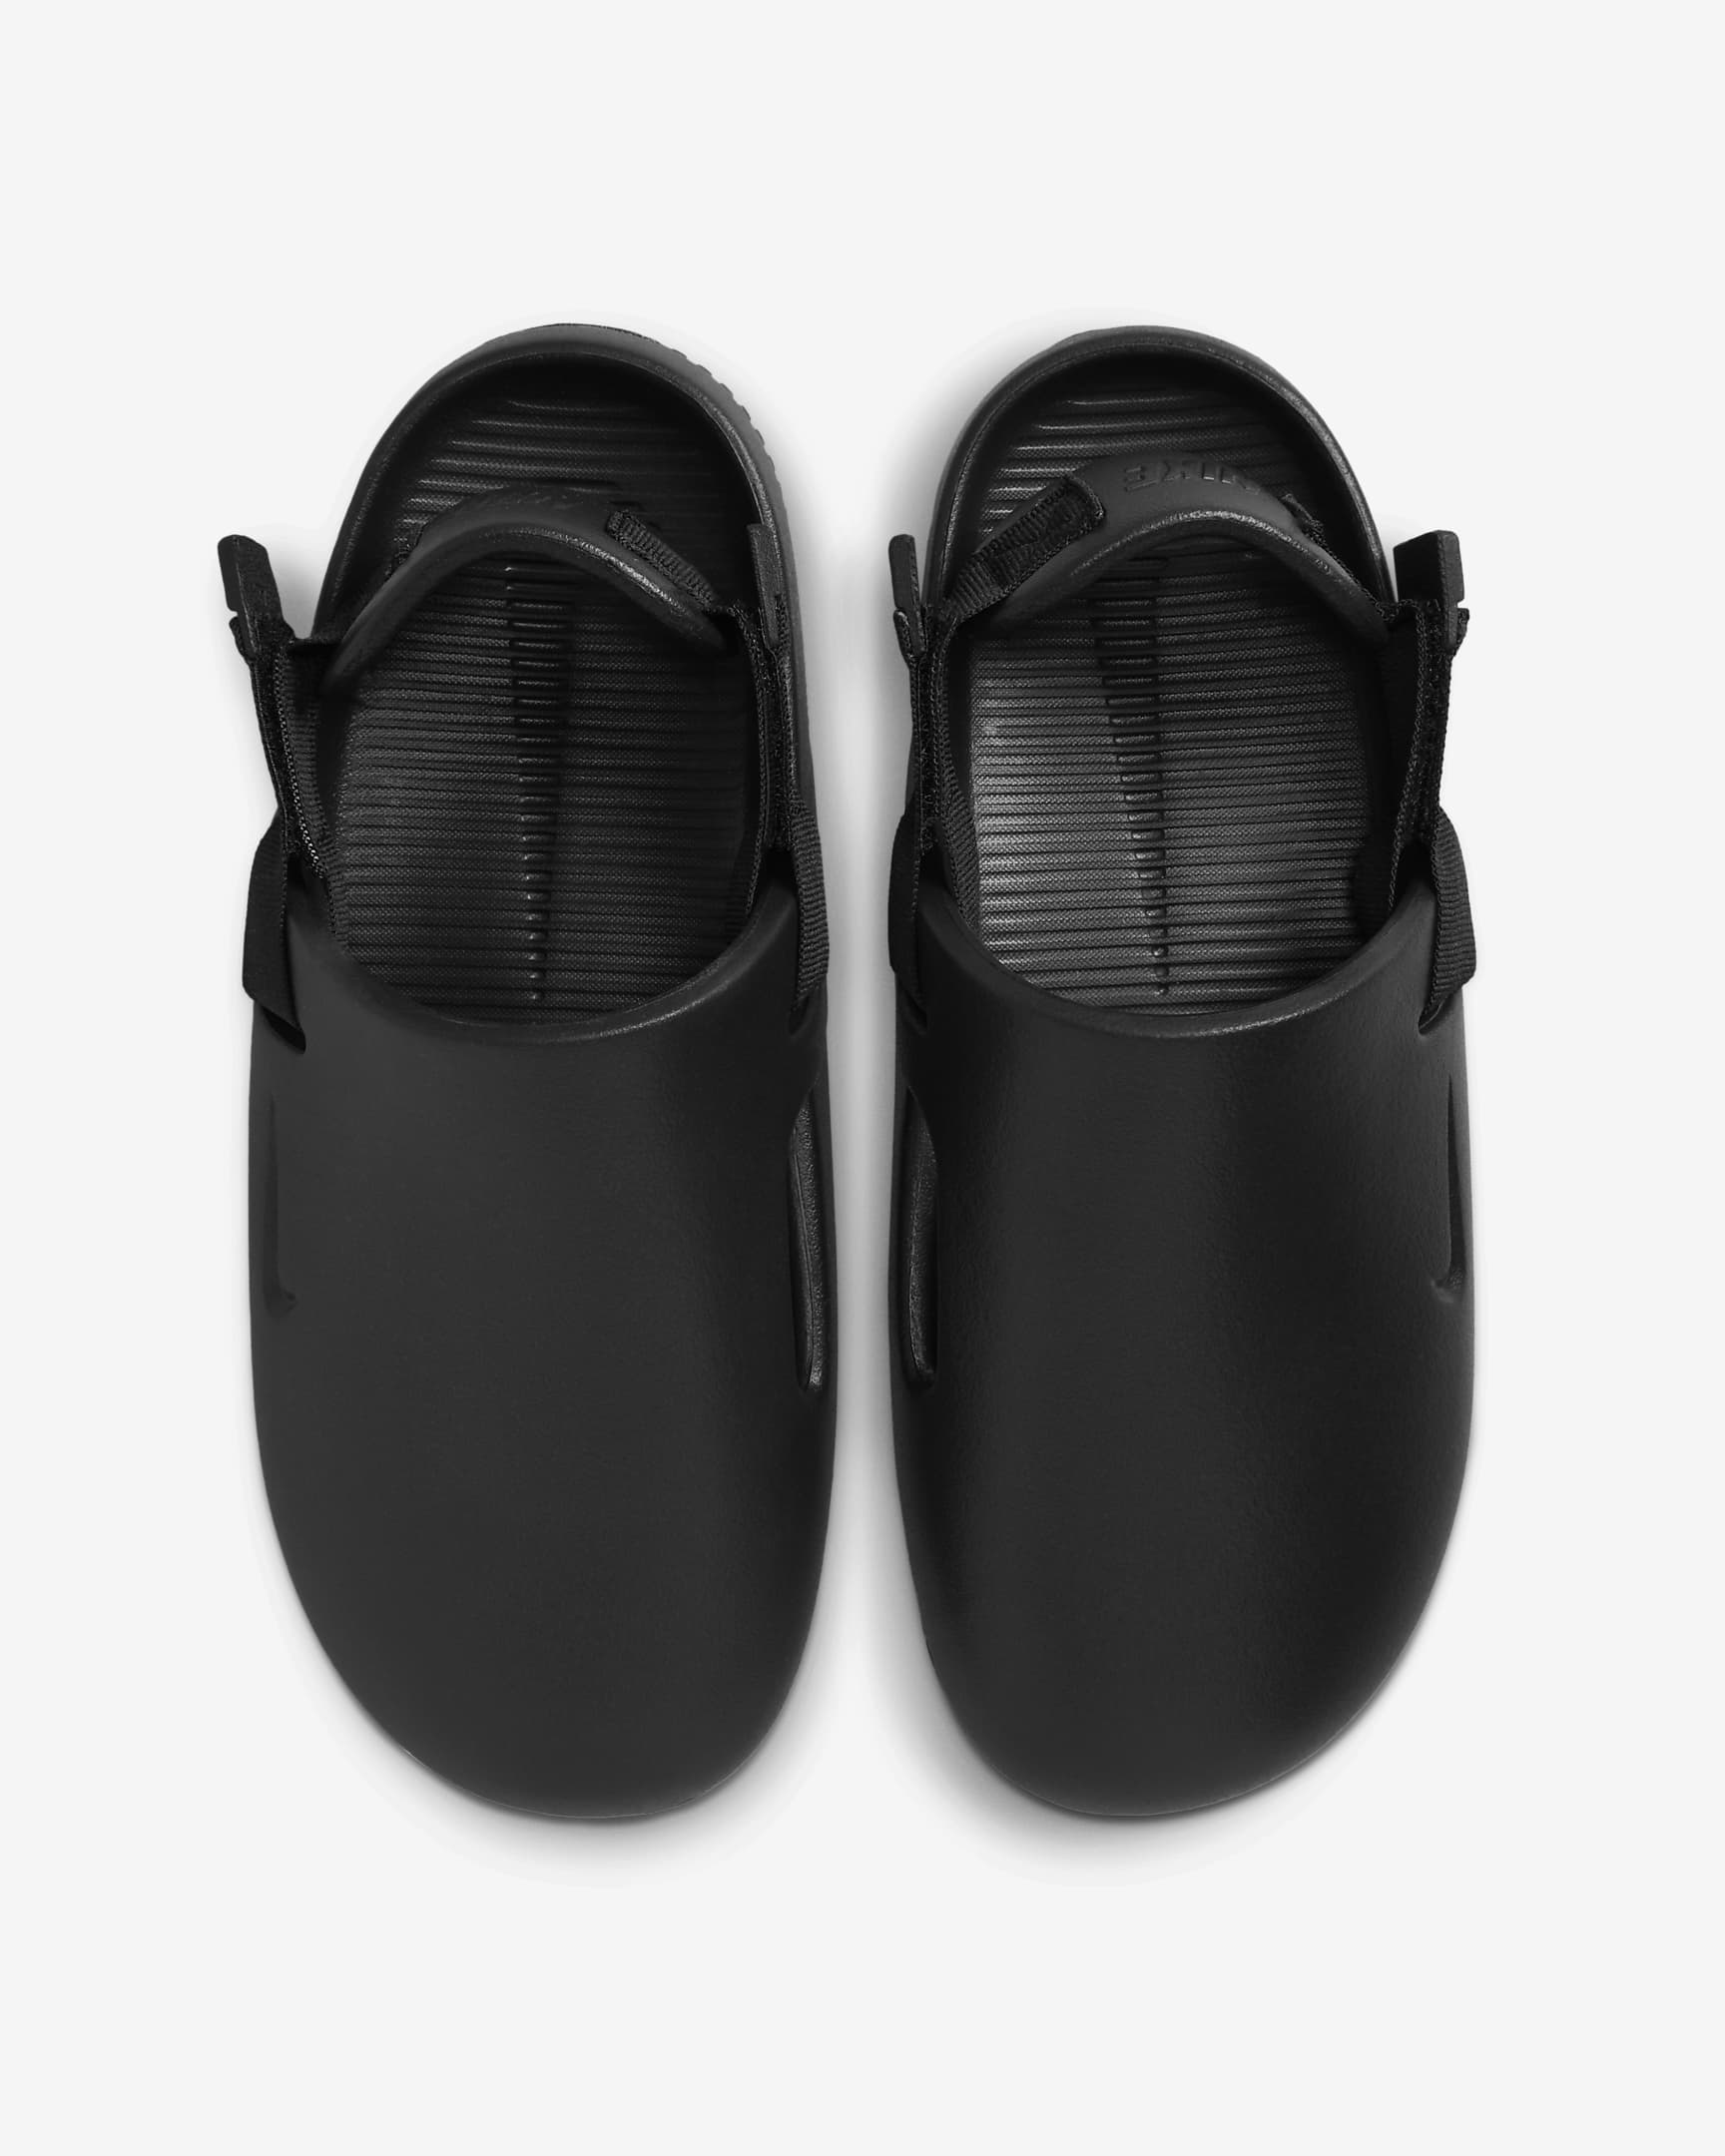 Nike Calm Women's Mules - Black/Black